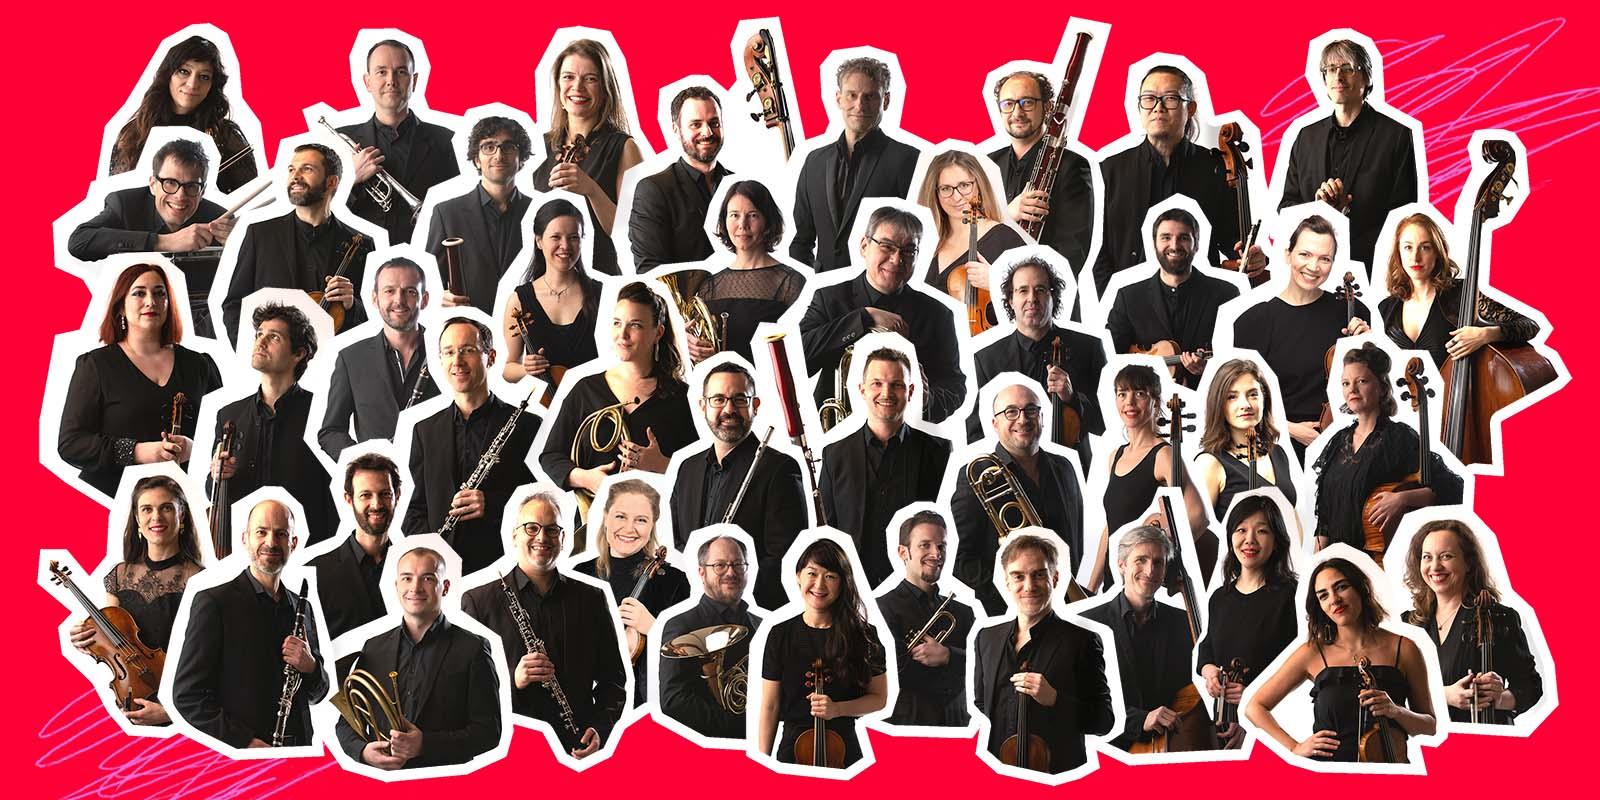 Orchestre du Geneva camerata